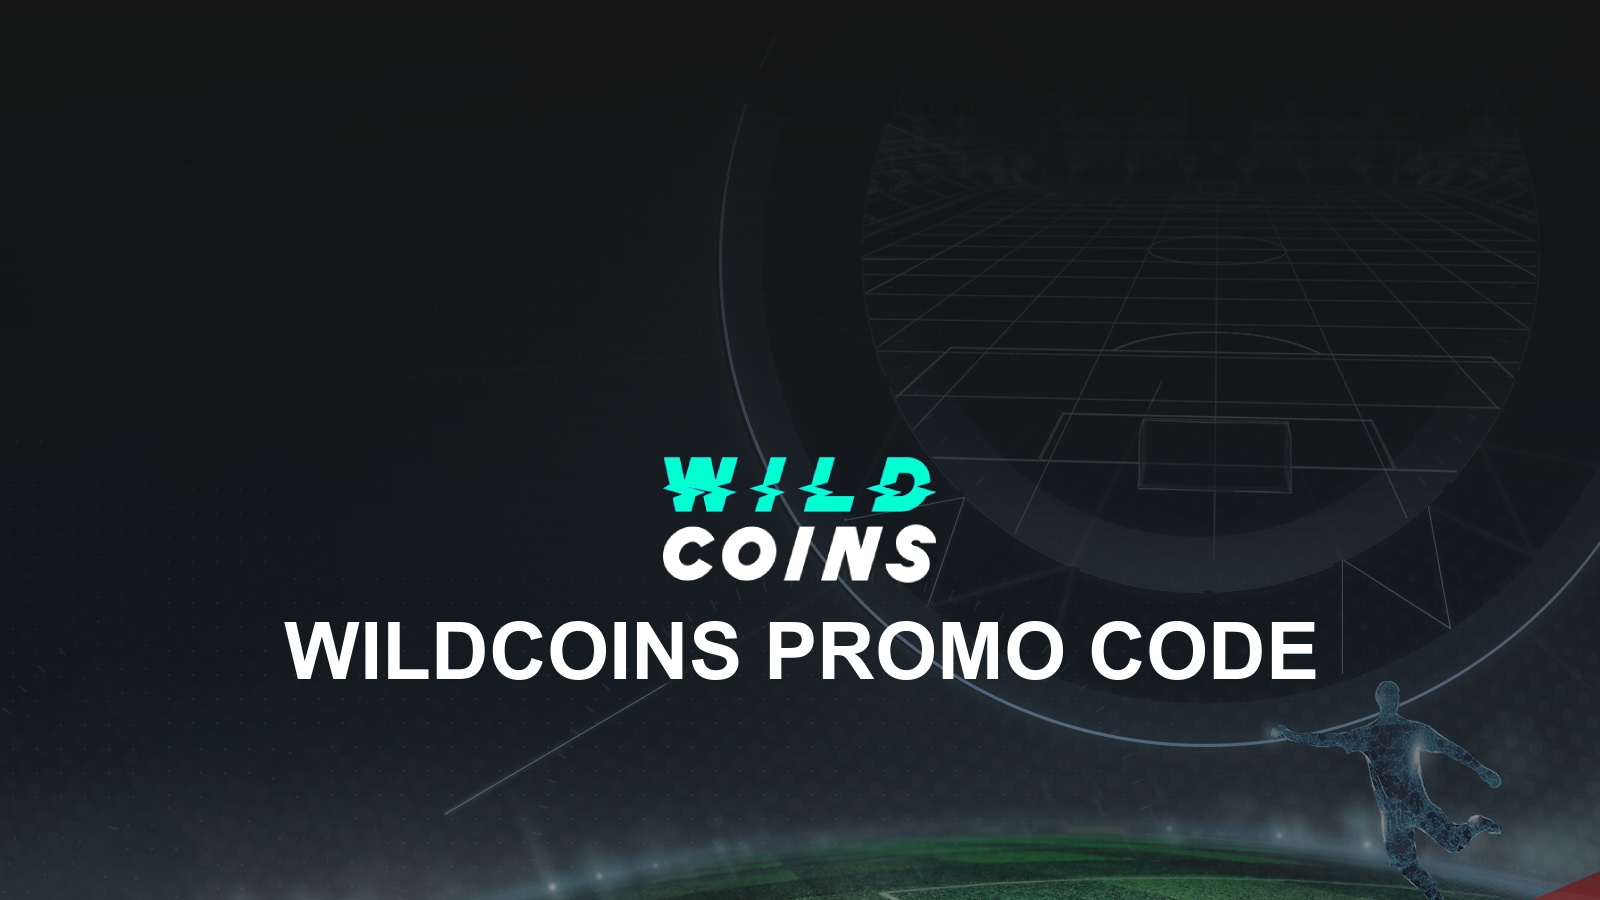 wildcoins casino no deposit bonus codes